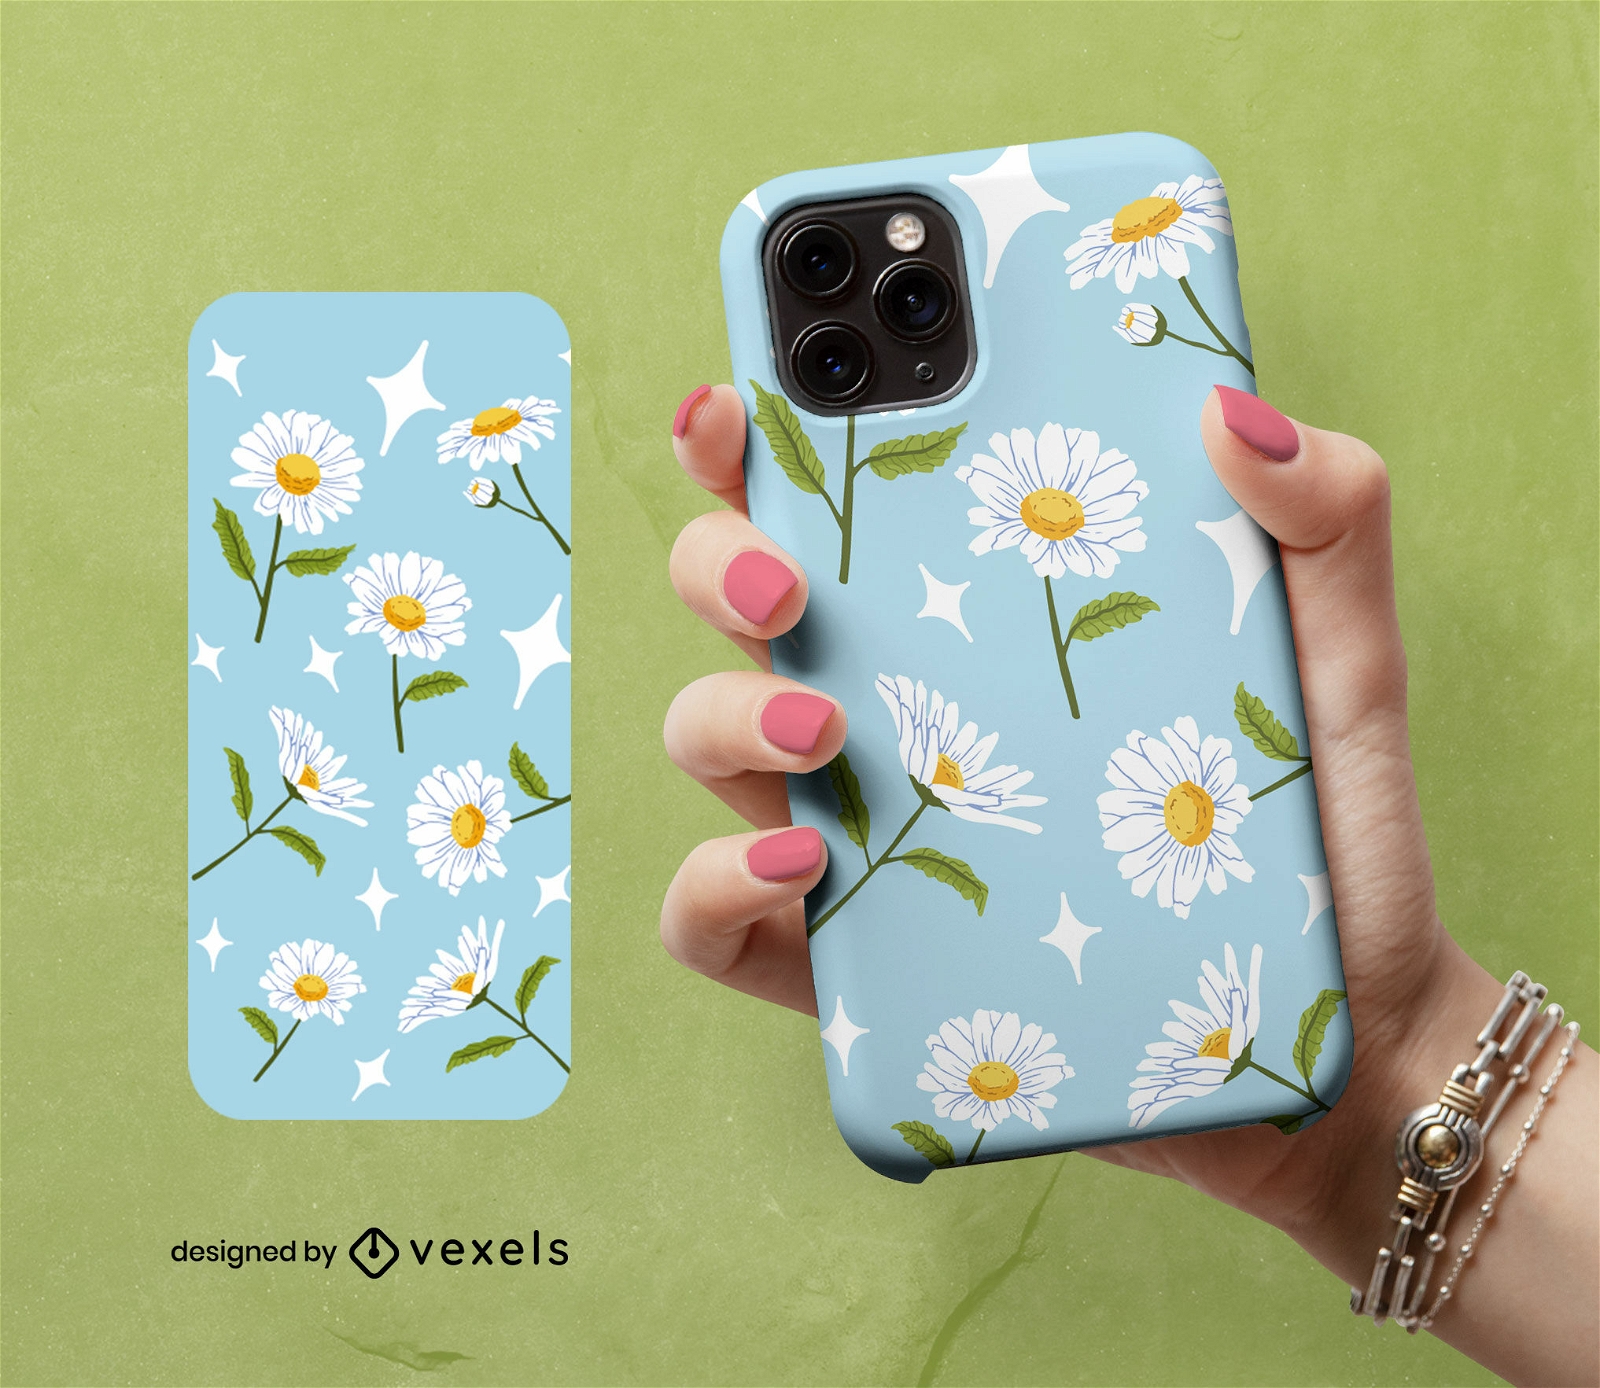 Daisy flower phone case design